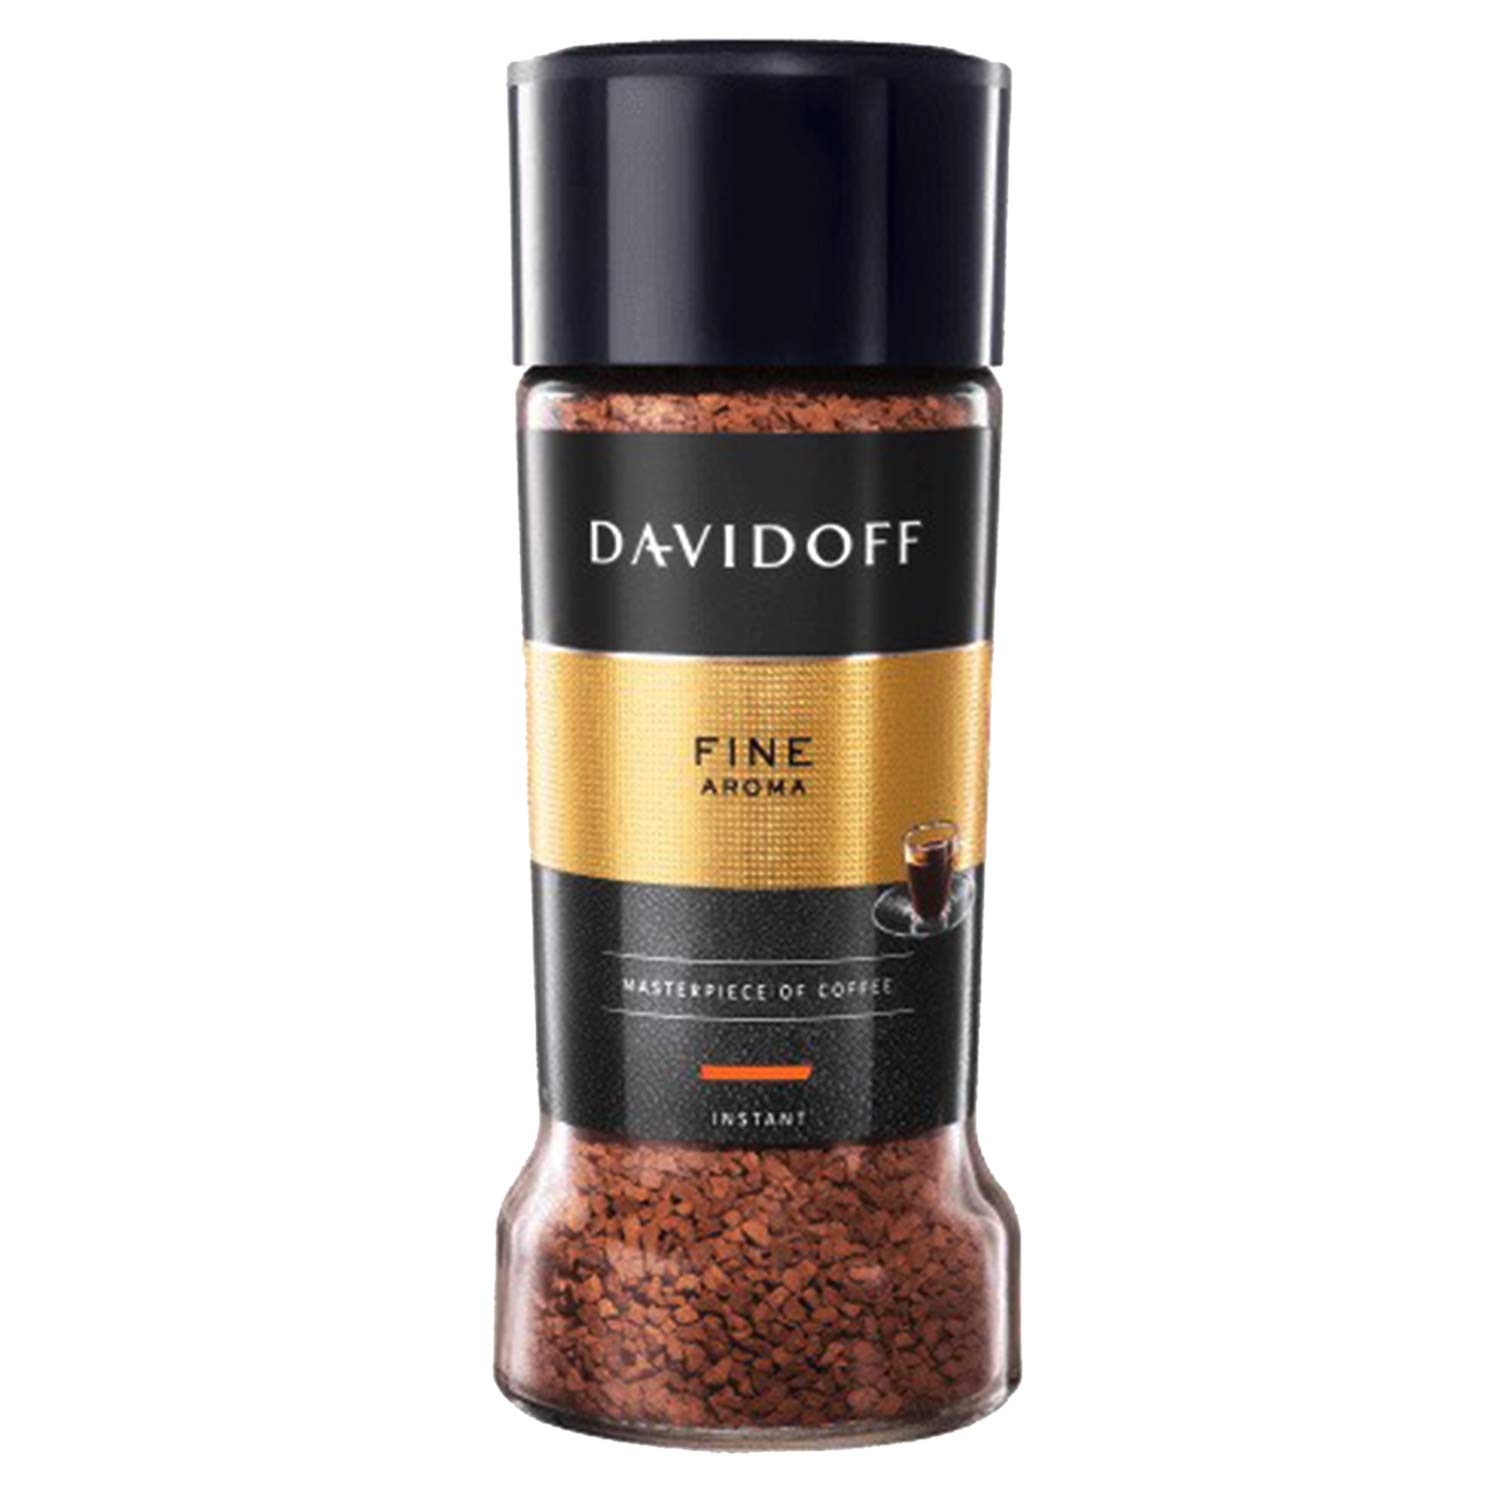 Davidoff Coffee 100 gm